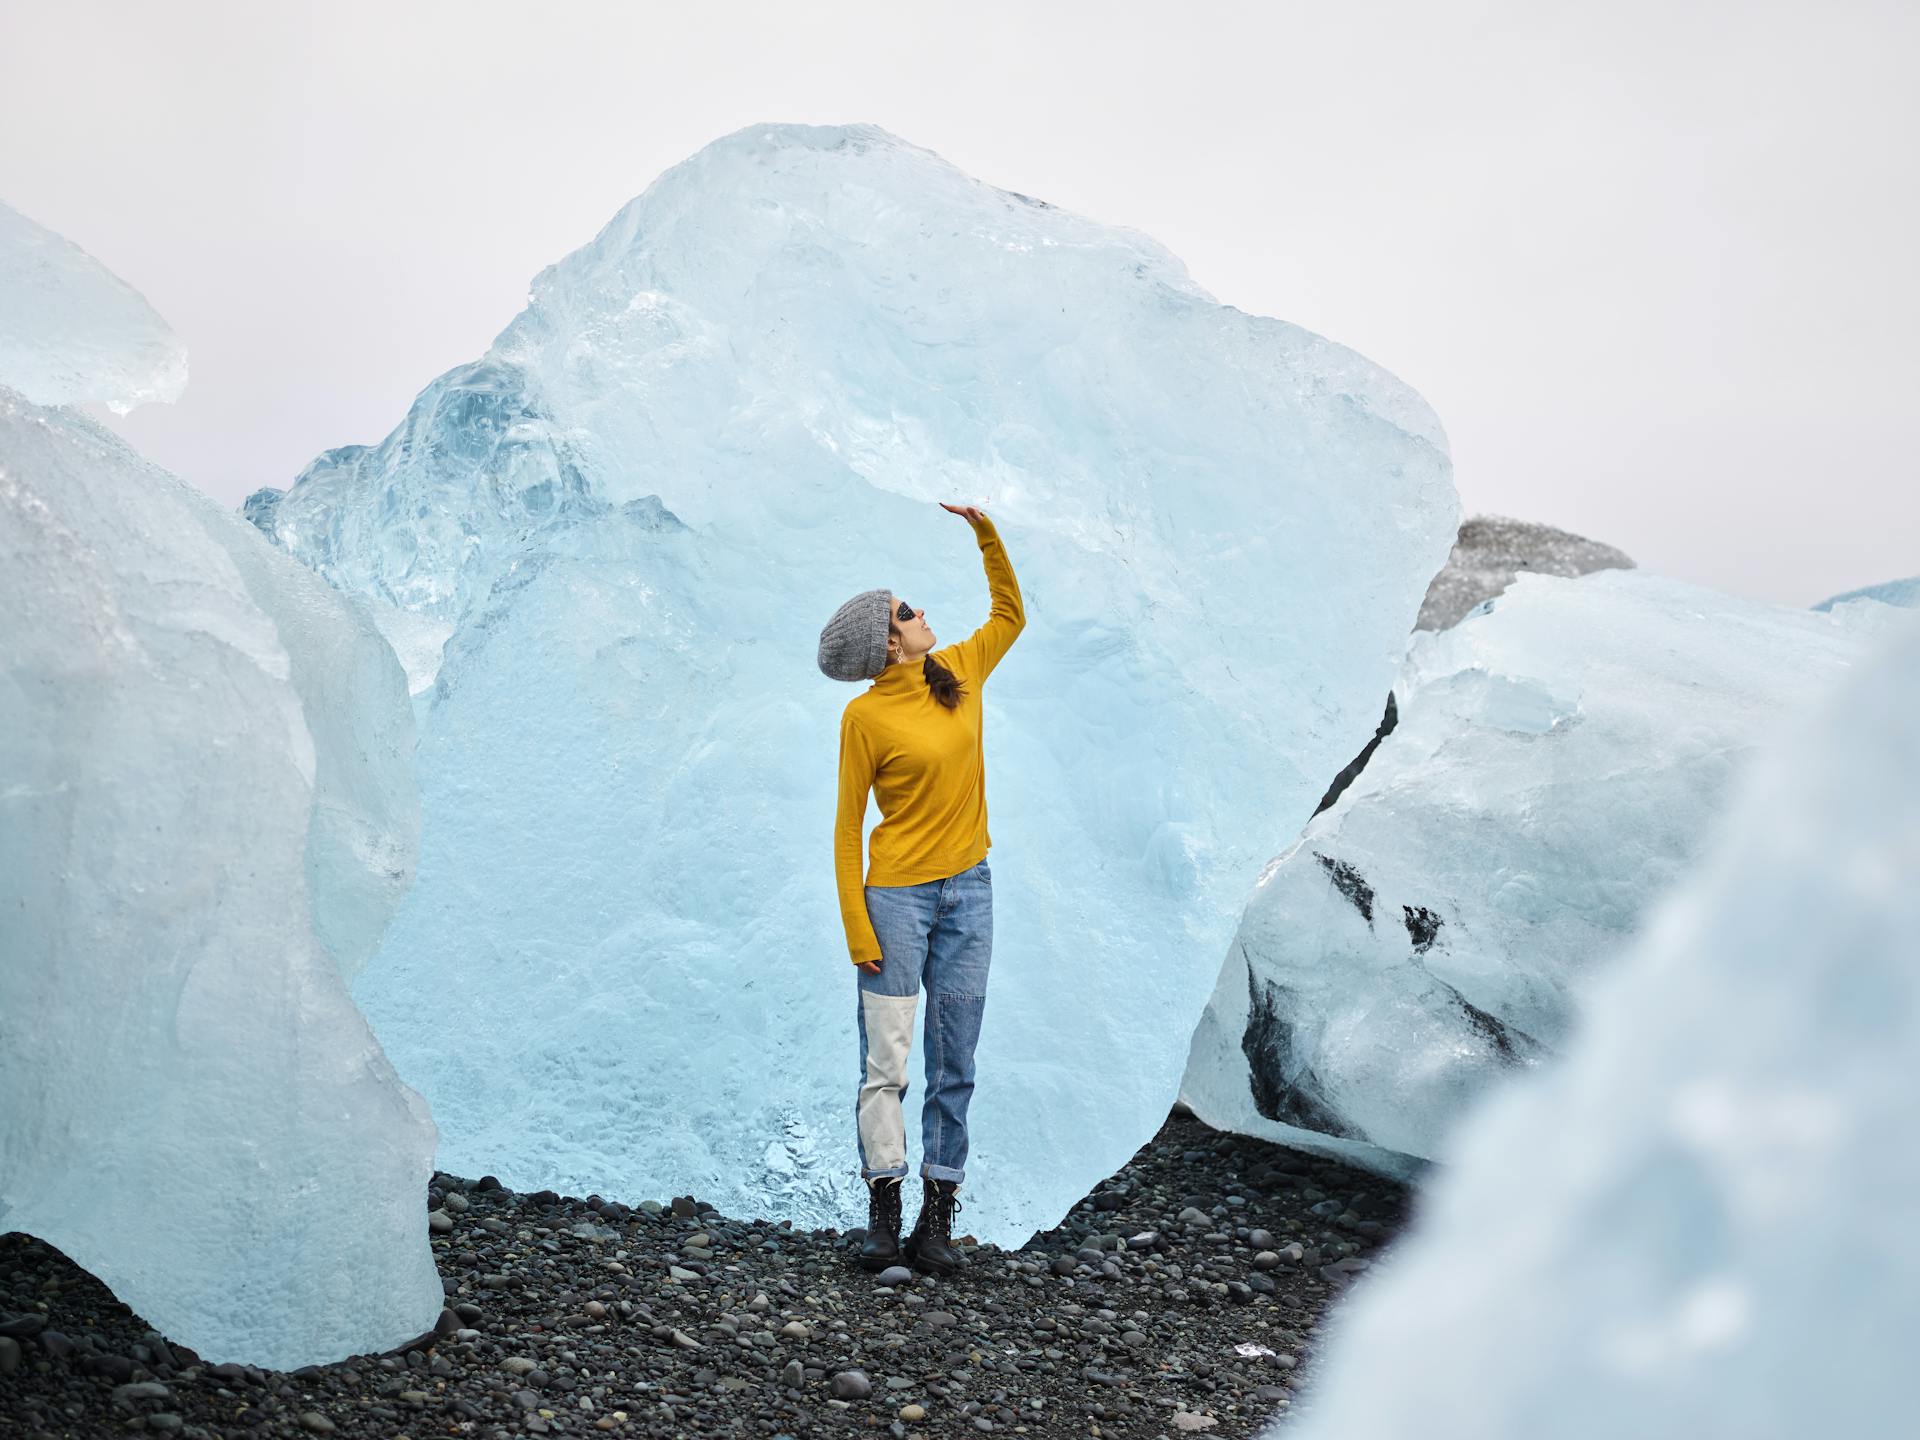 Woman admiring view of gigantic ice chunks